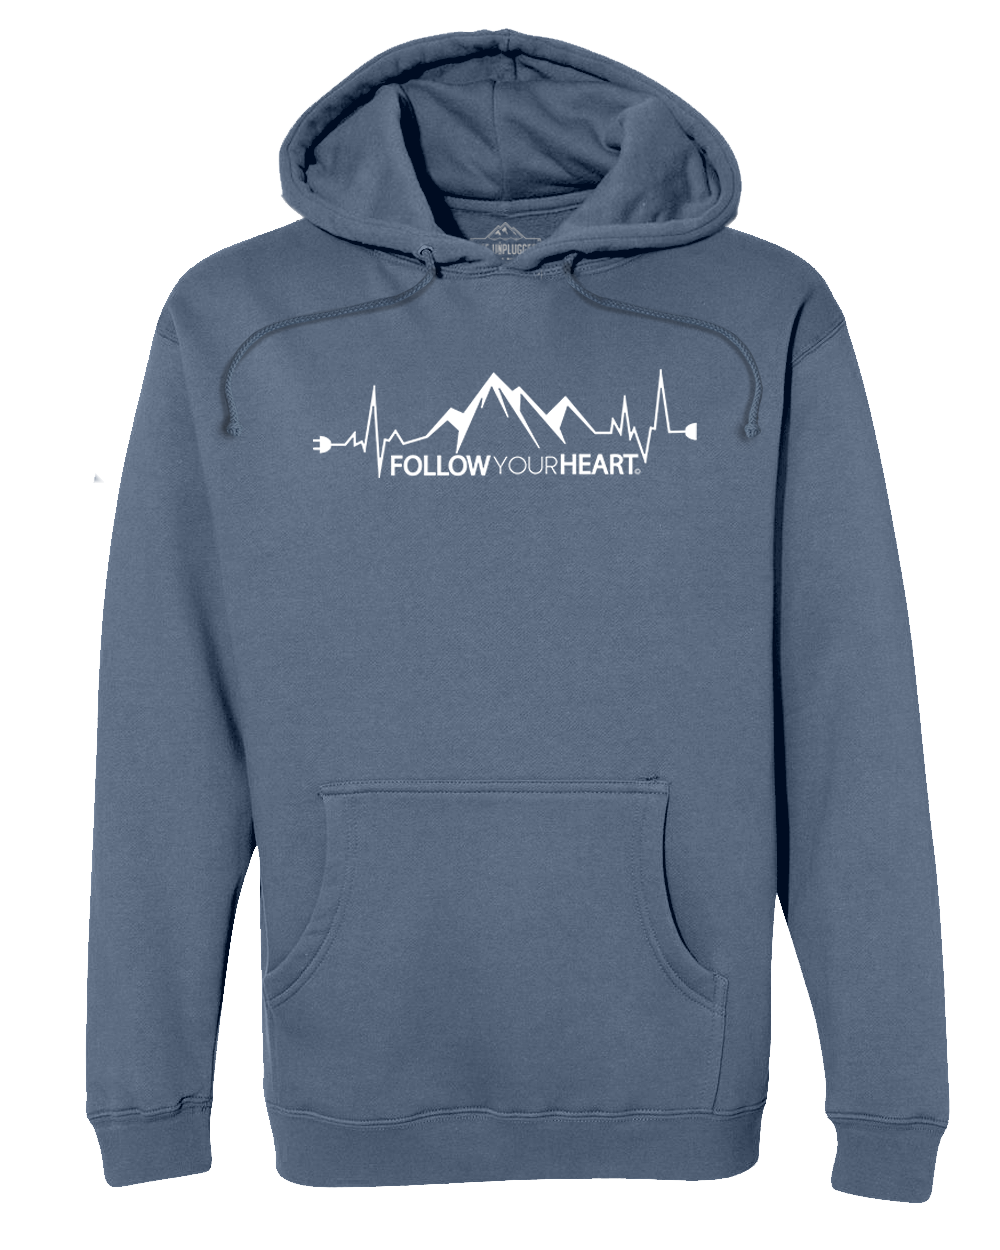 FOLLOW YOUR HEART Premium Heavyweight Hooded Sweatshirt